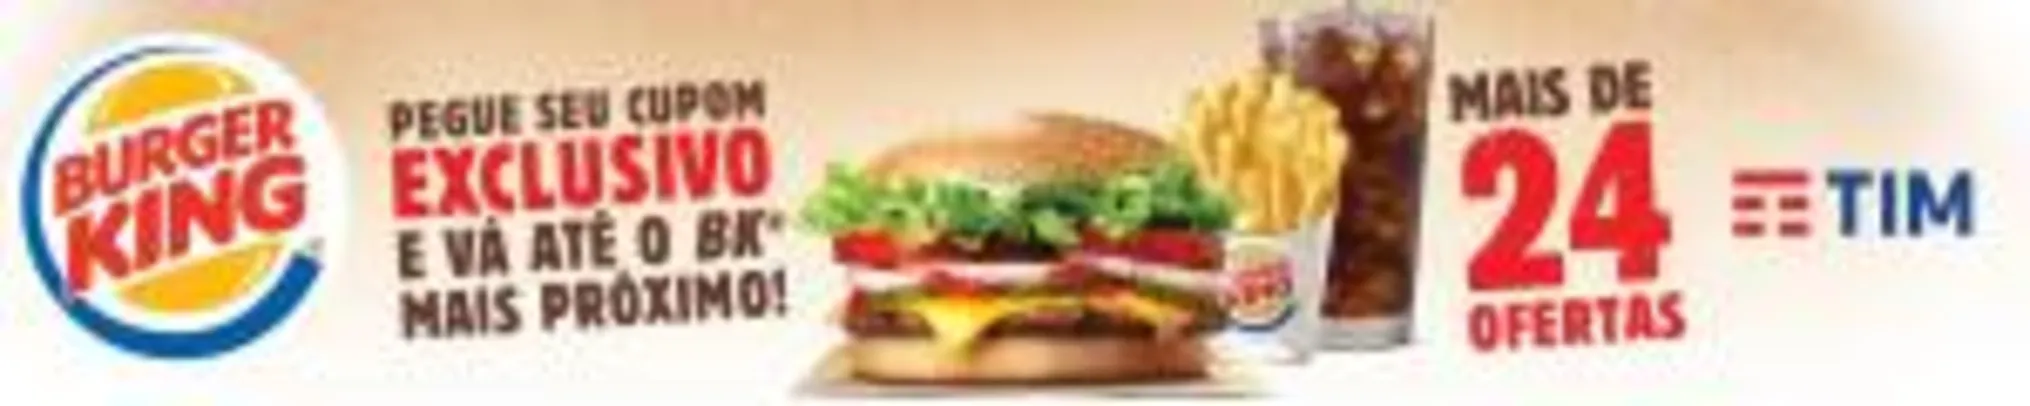 Cupons Burger King exclusivos (parceria com a TIM)